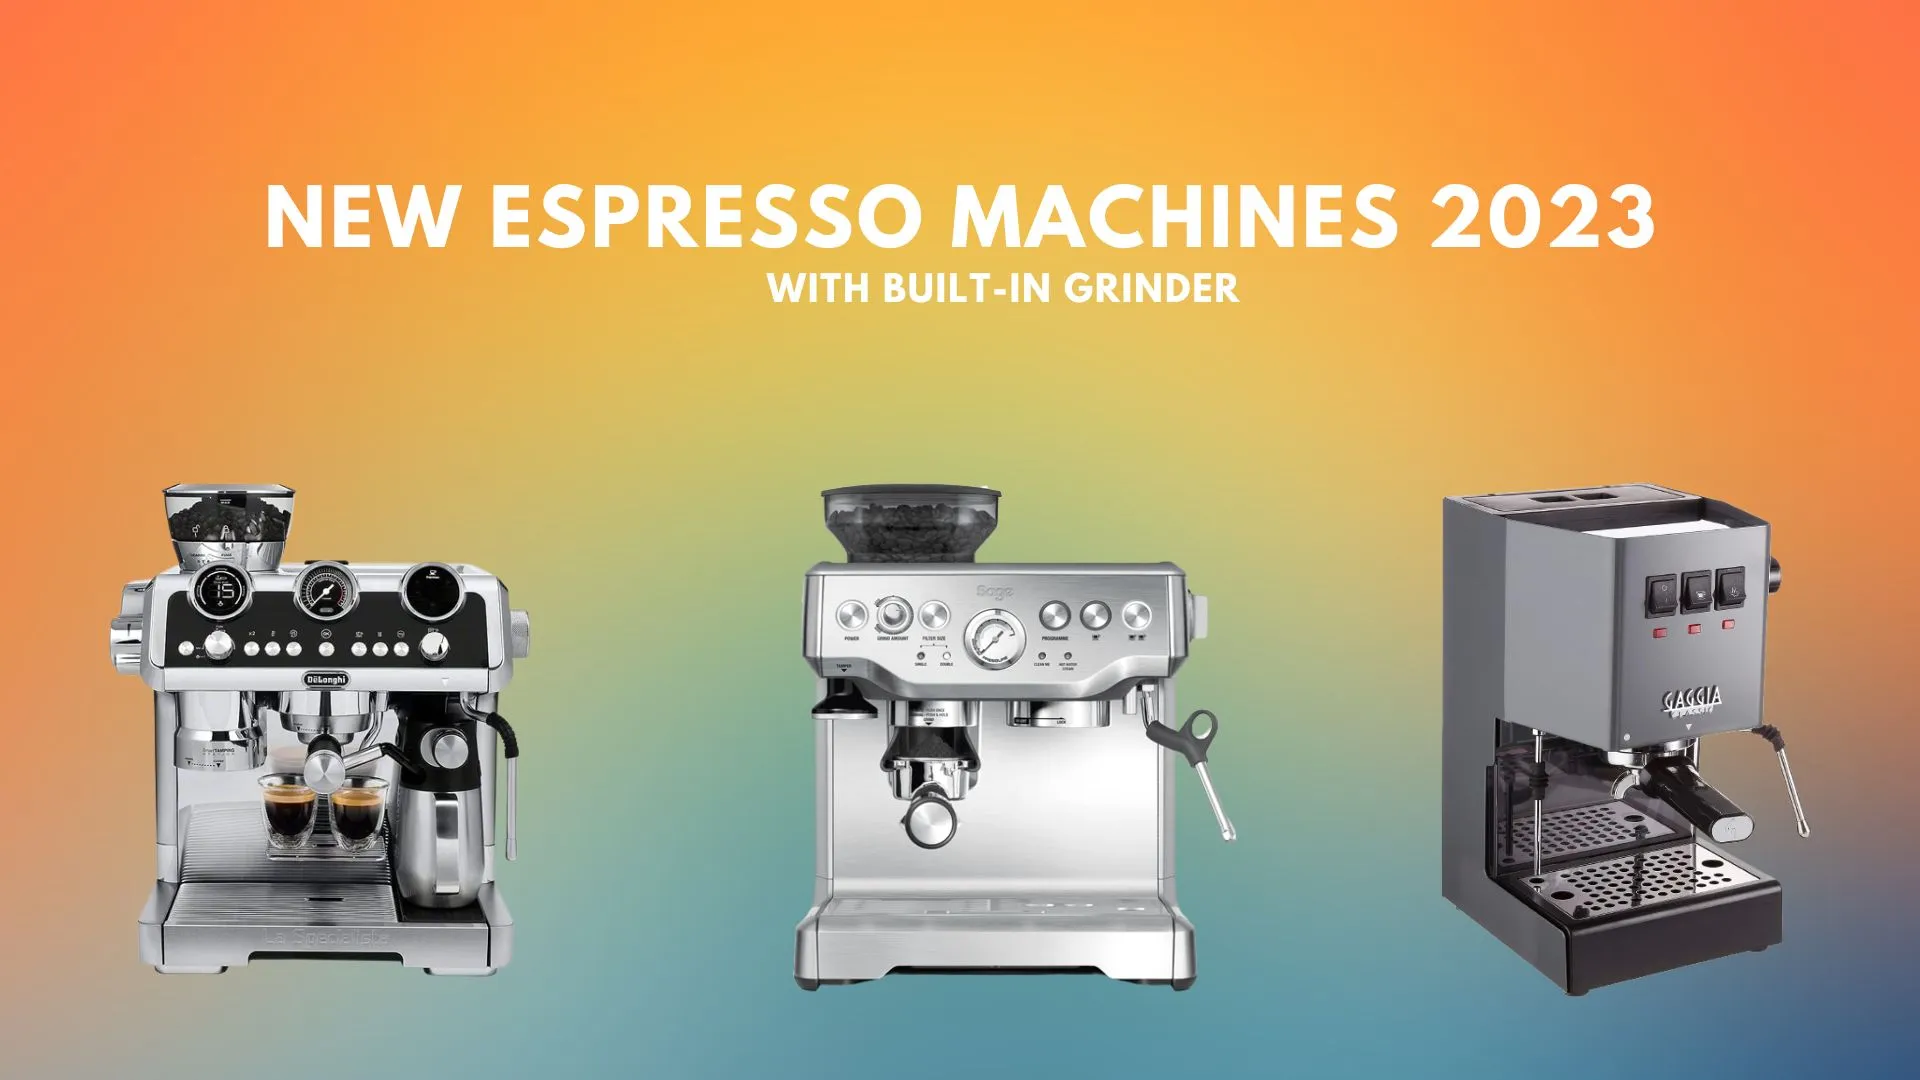 New espresso machines 2023 (Breville, De'Longhi La Specialista ...)